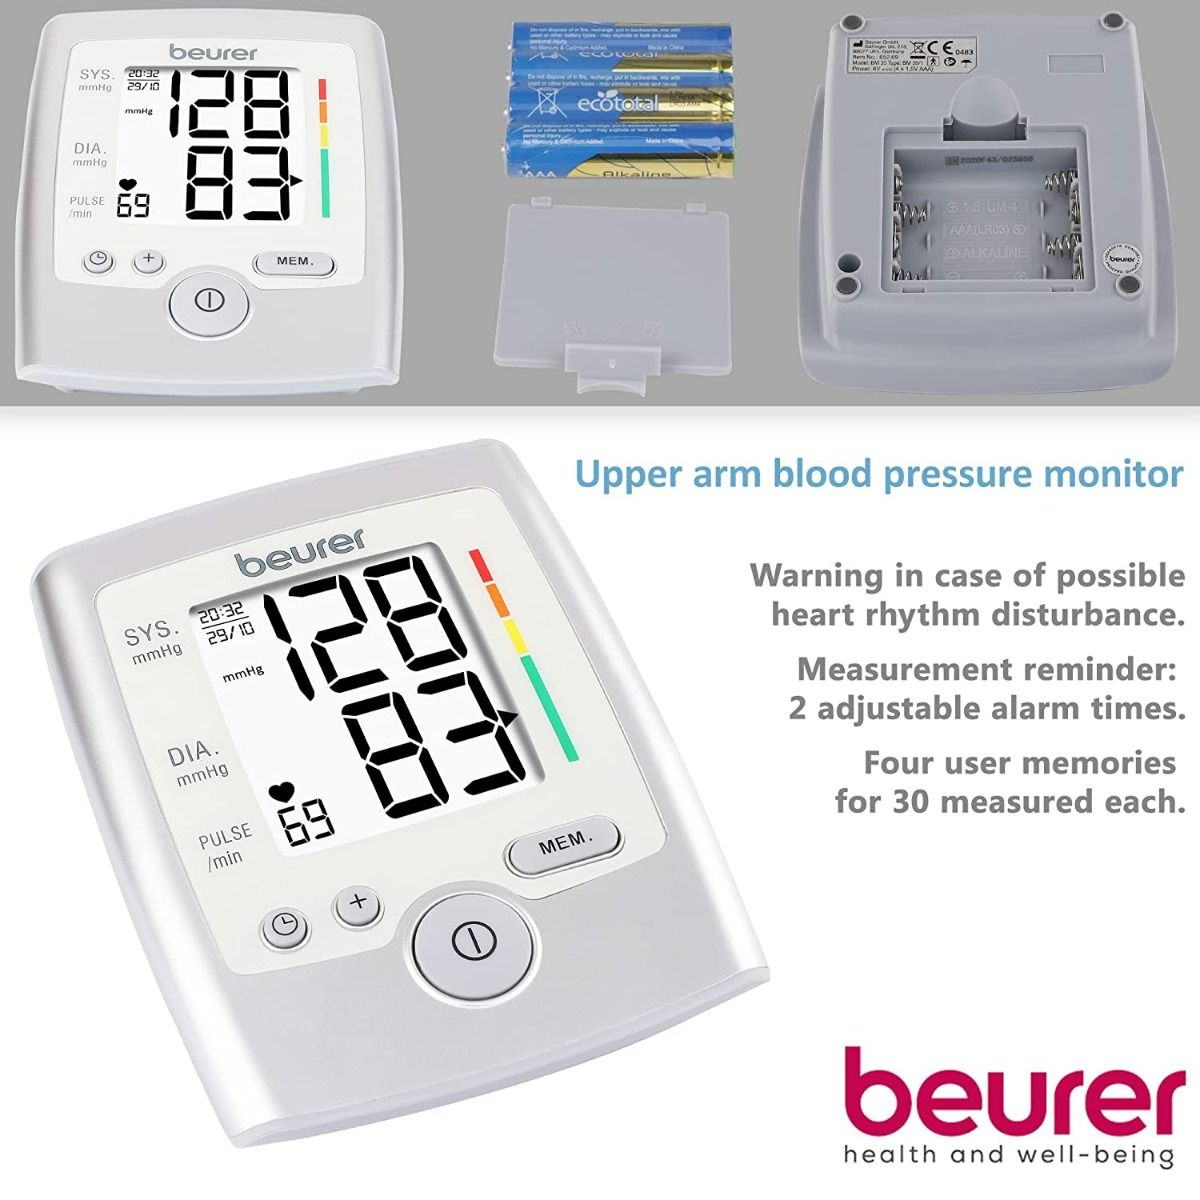 BM 35 Blood Pressure Monitor